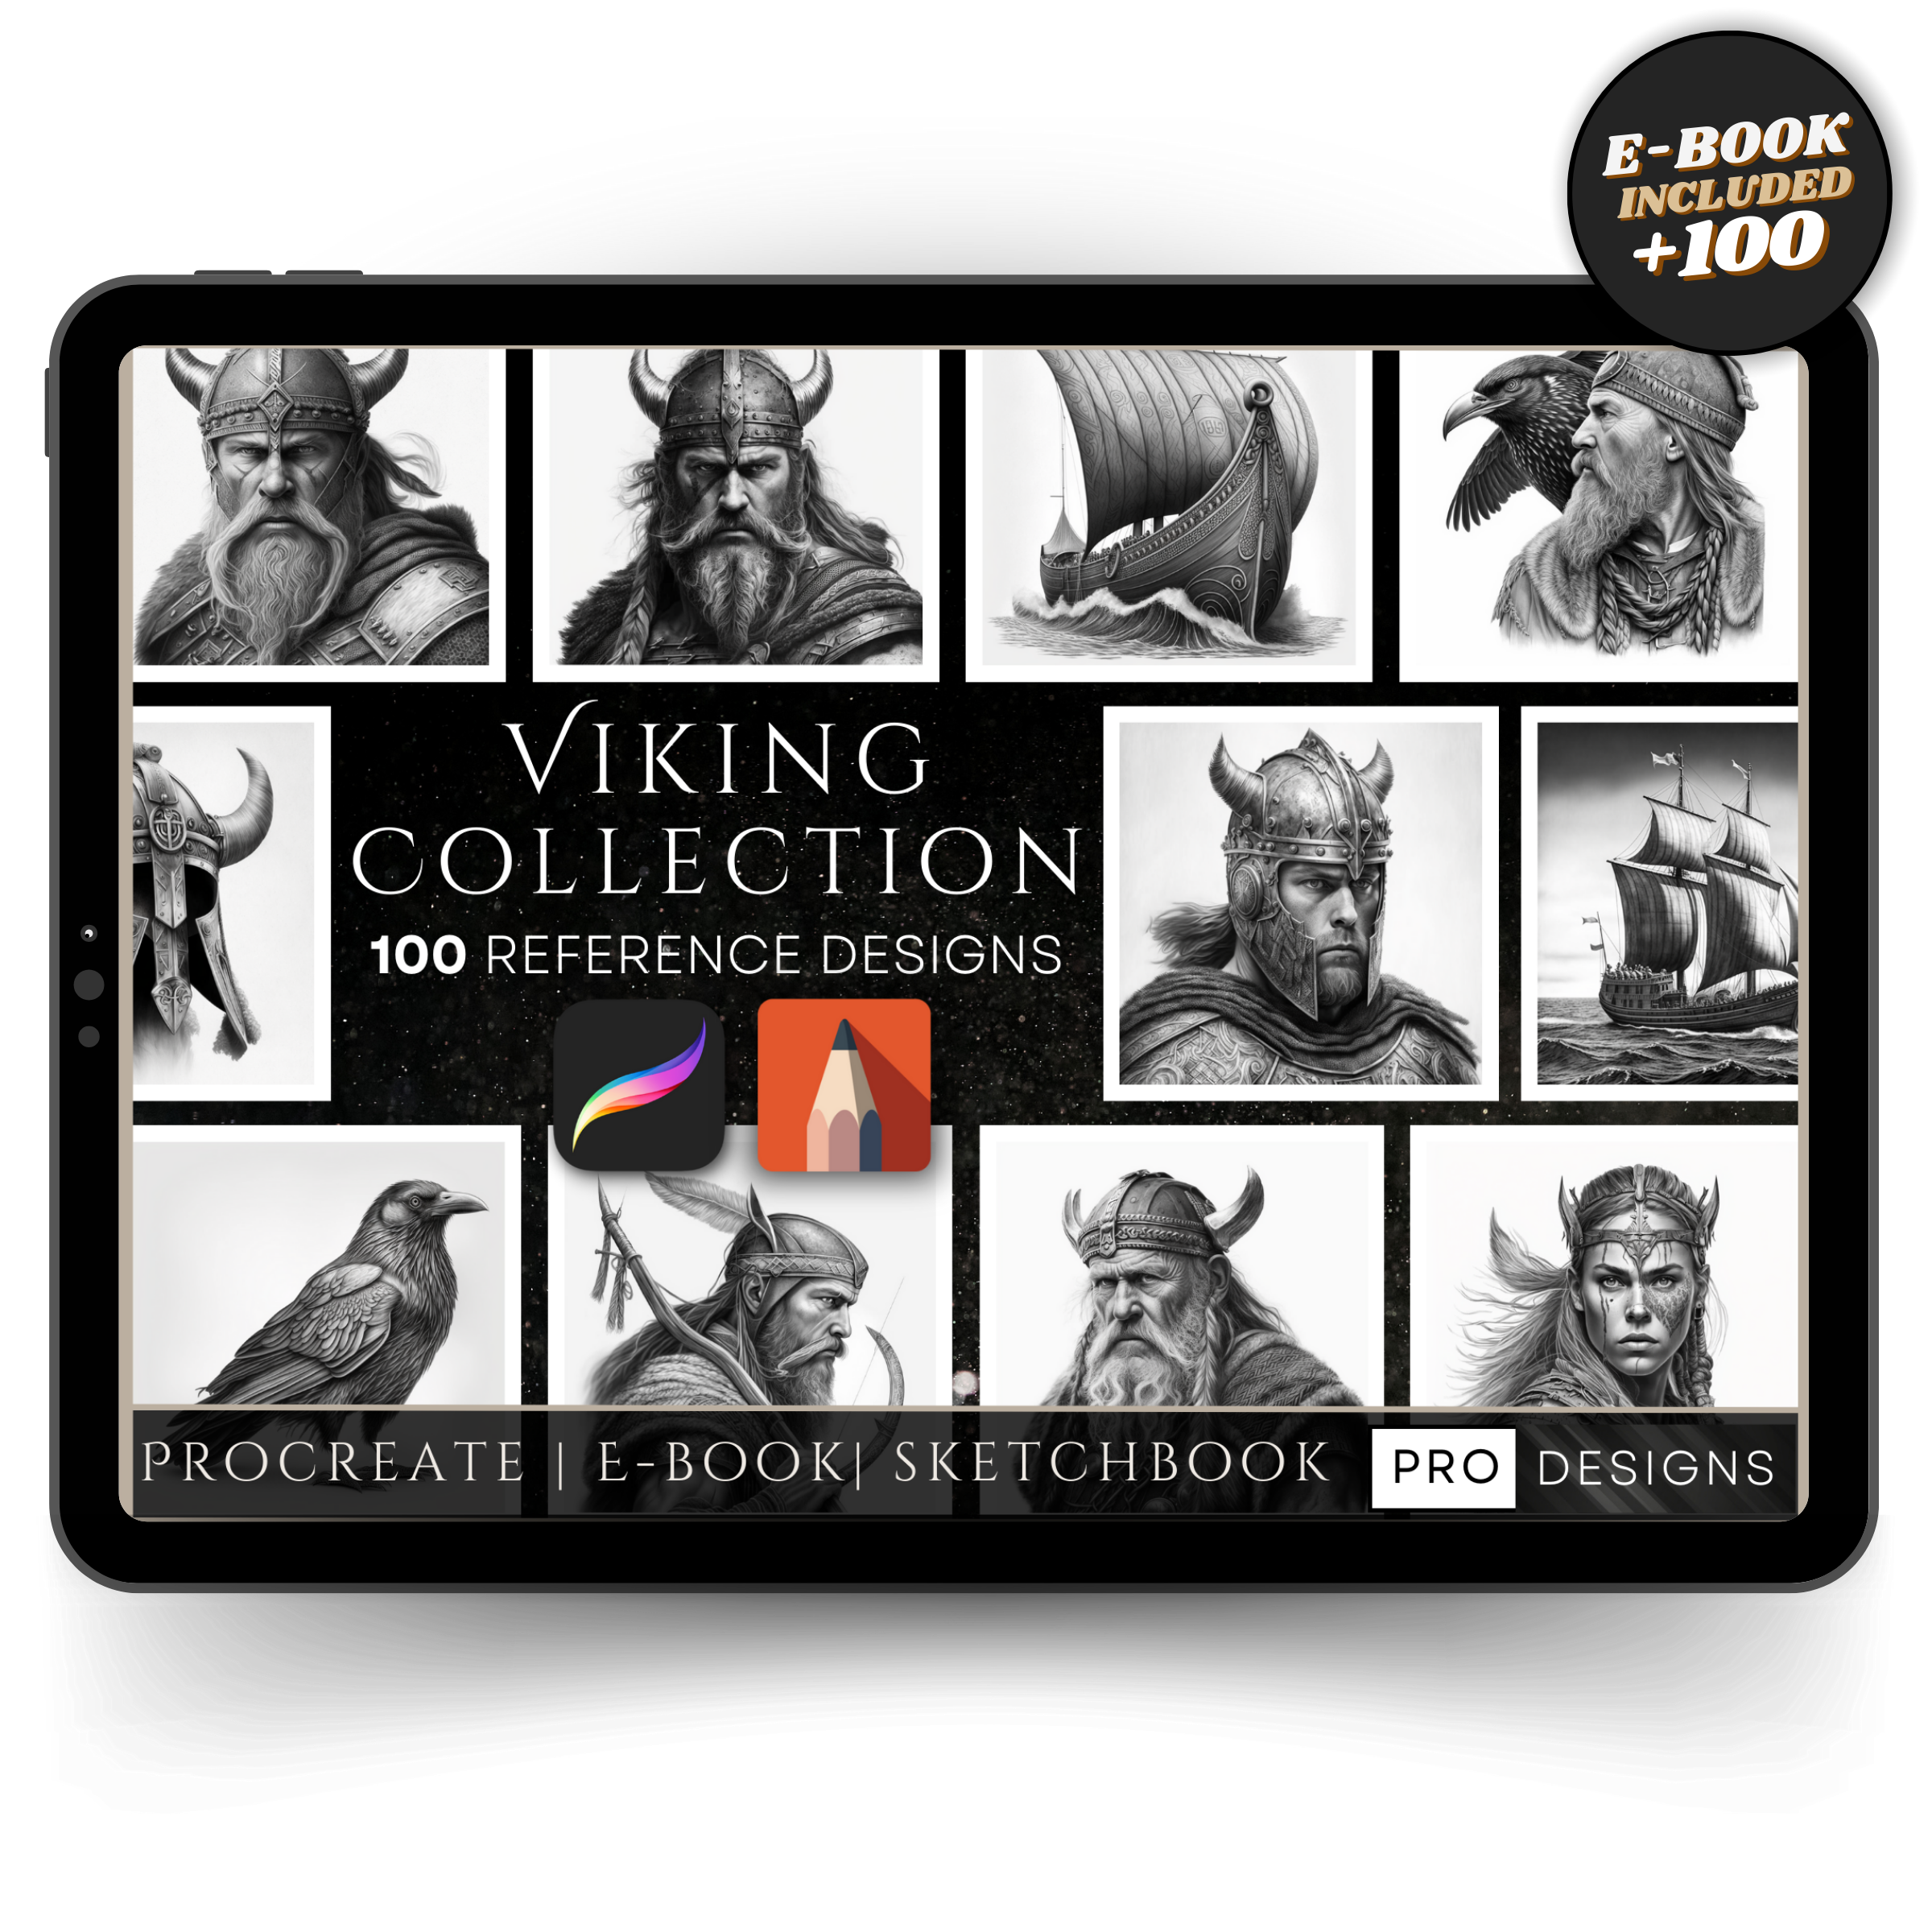 "Saga of the Northmen" - The Viking Collection